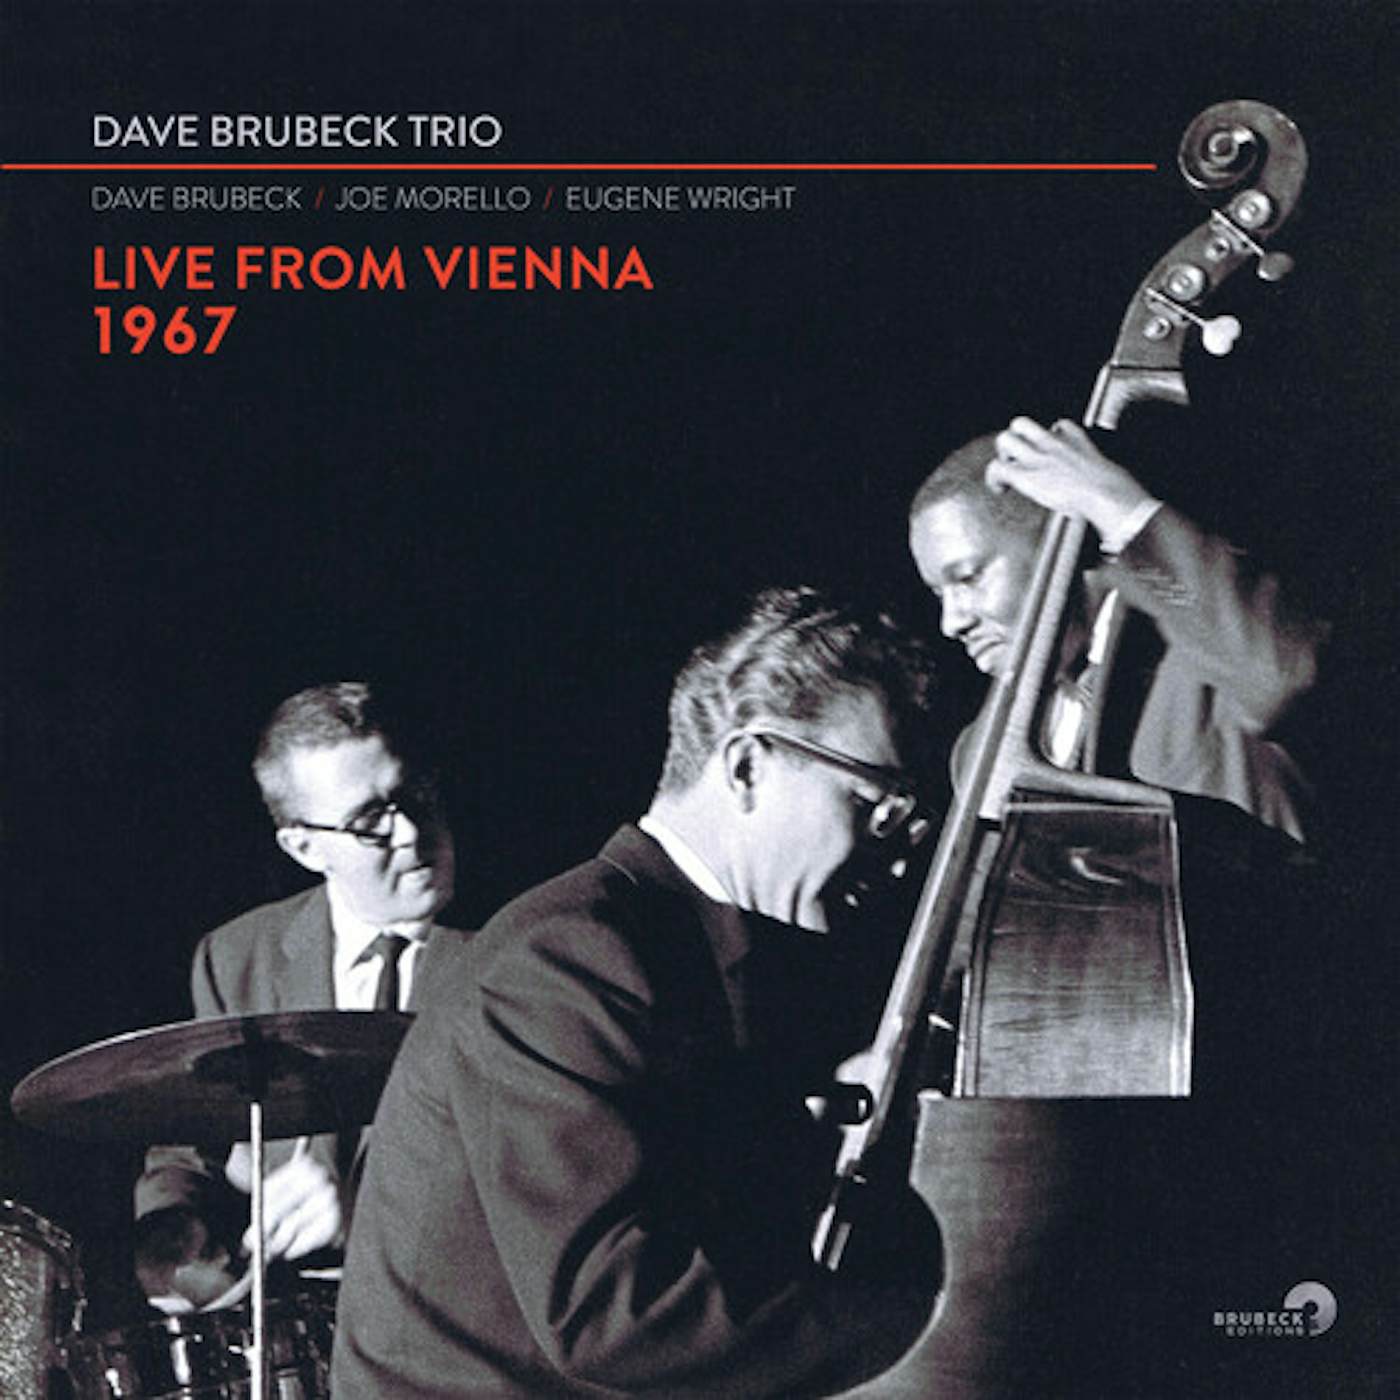 Dave Brubeck LIVE FROM VIENNA 1967 Vinyl Record